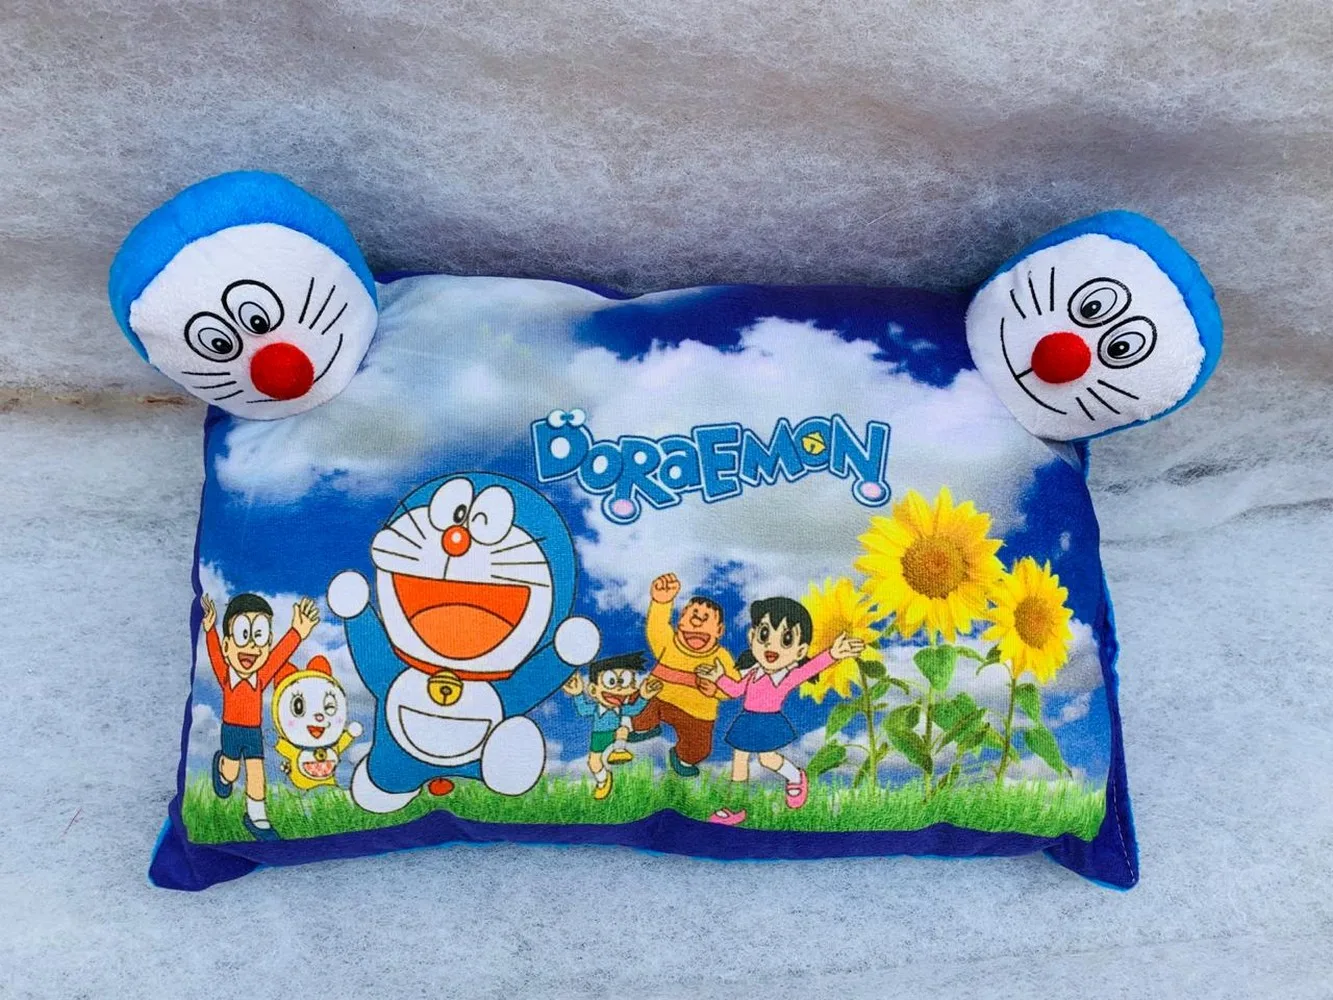 Doraemon face kids pillow, 18x12 inches